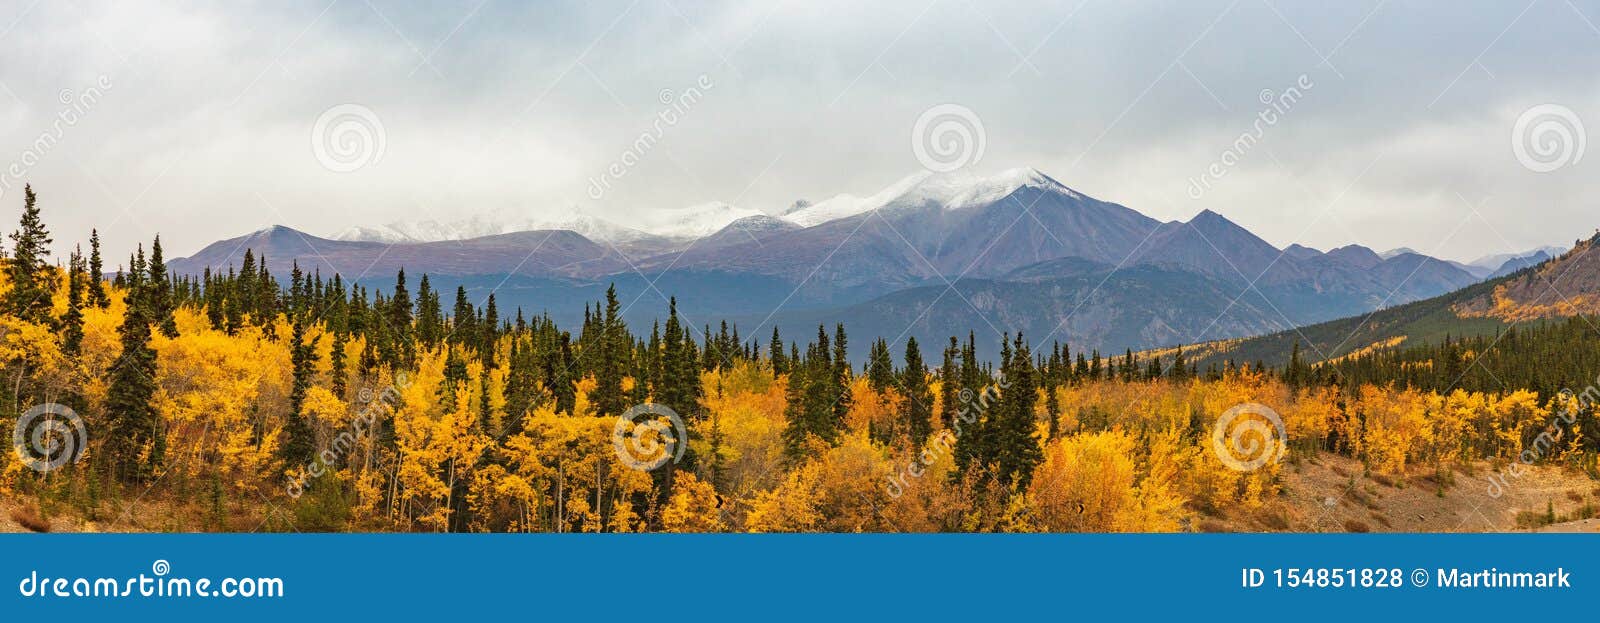 Alaska Mountains Landscape Nature Background Autumn Fall Season. Snow Peaks Panorama Stock Photo - Image of american, hiking: 154851828